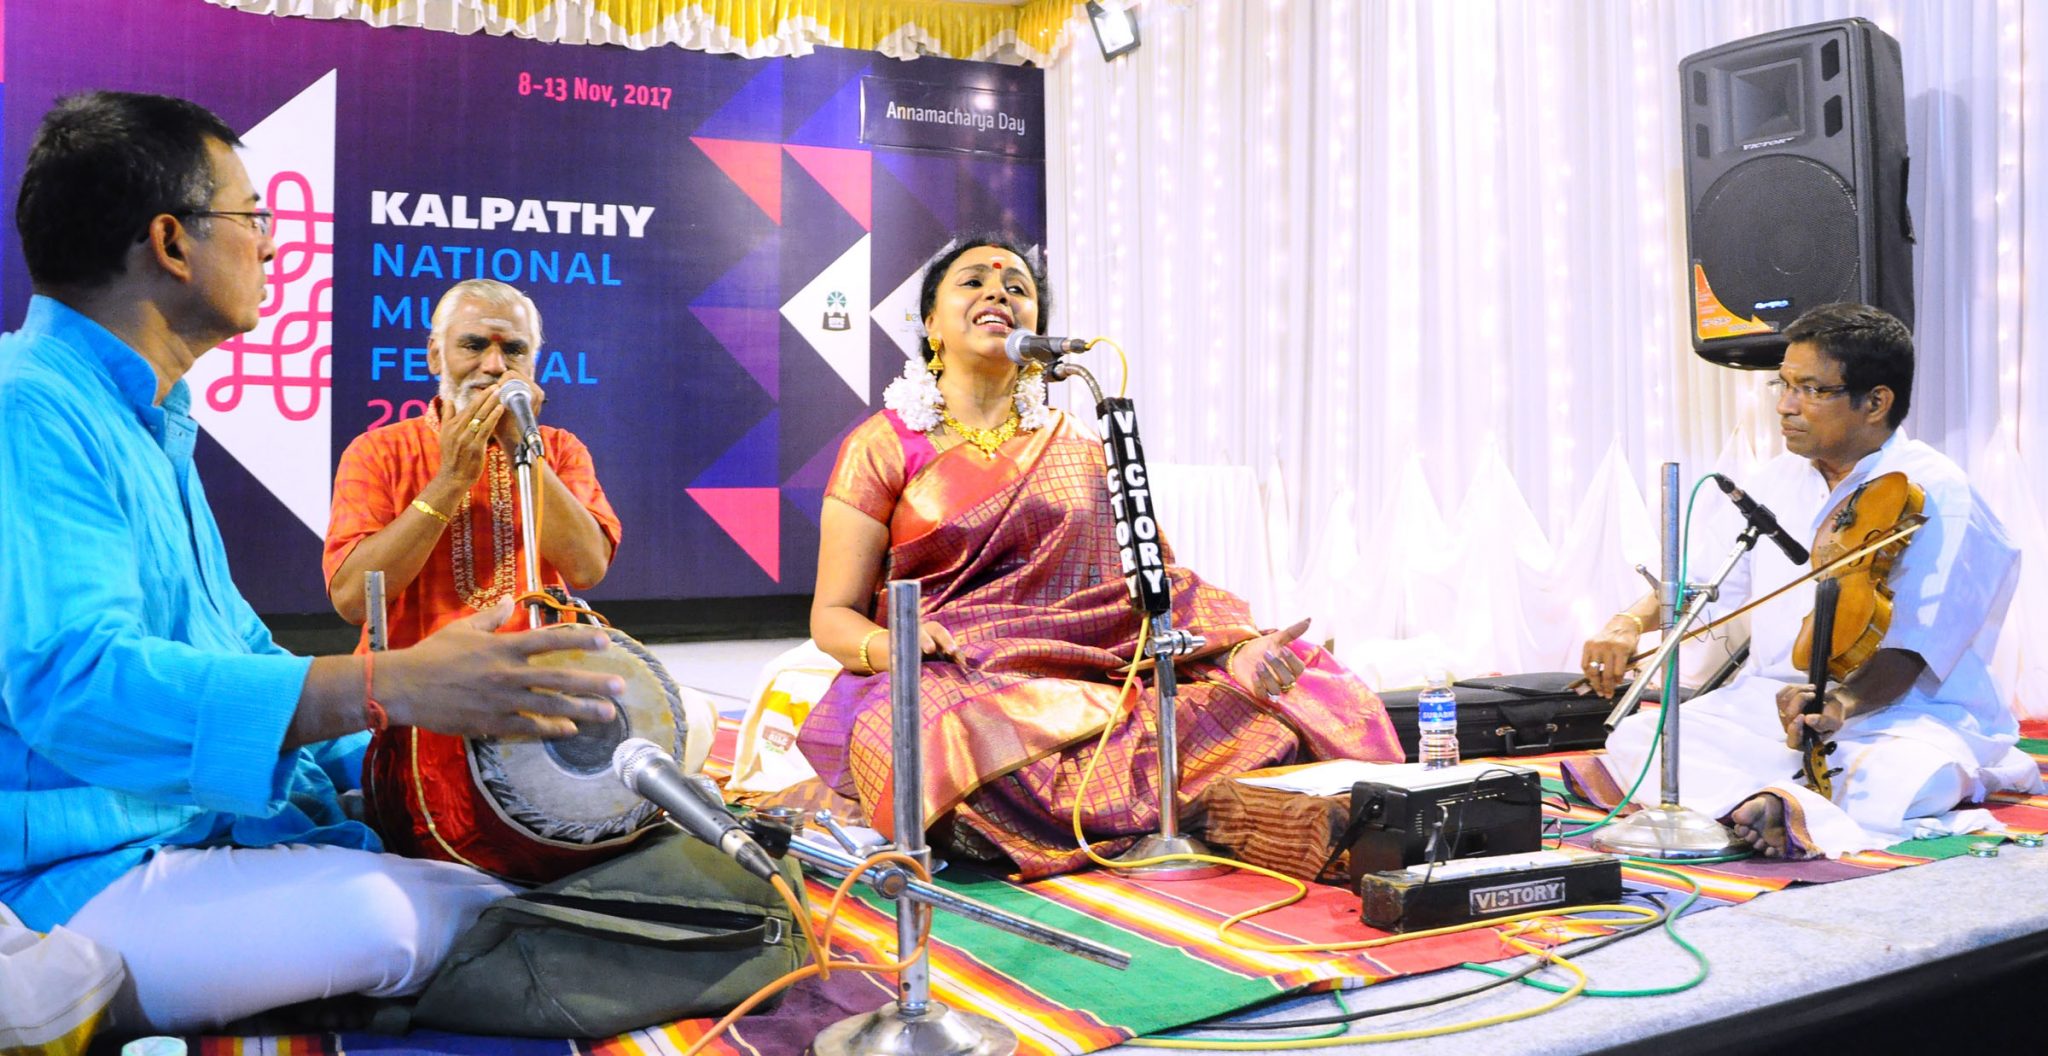 Kalapathy National Music Festival